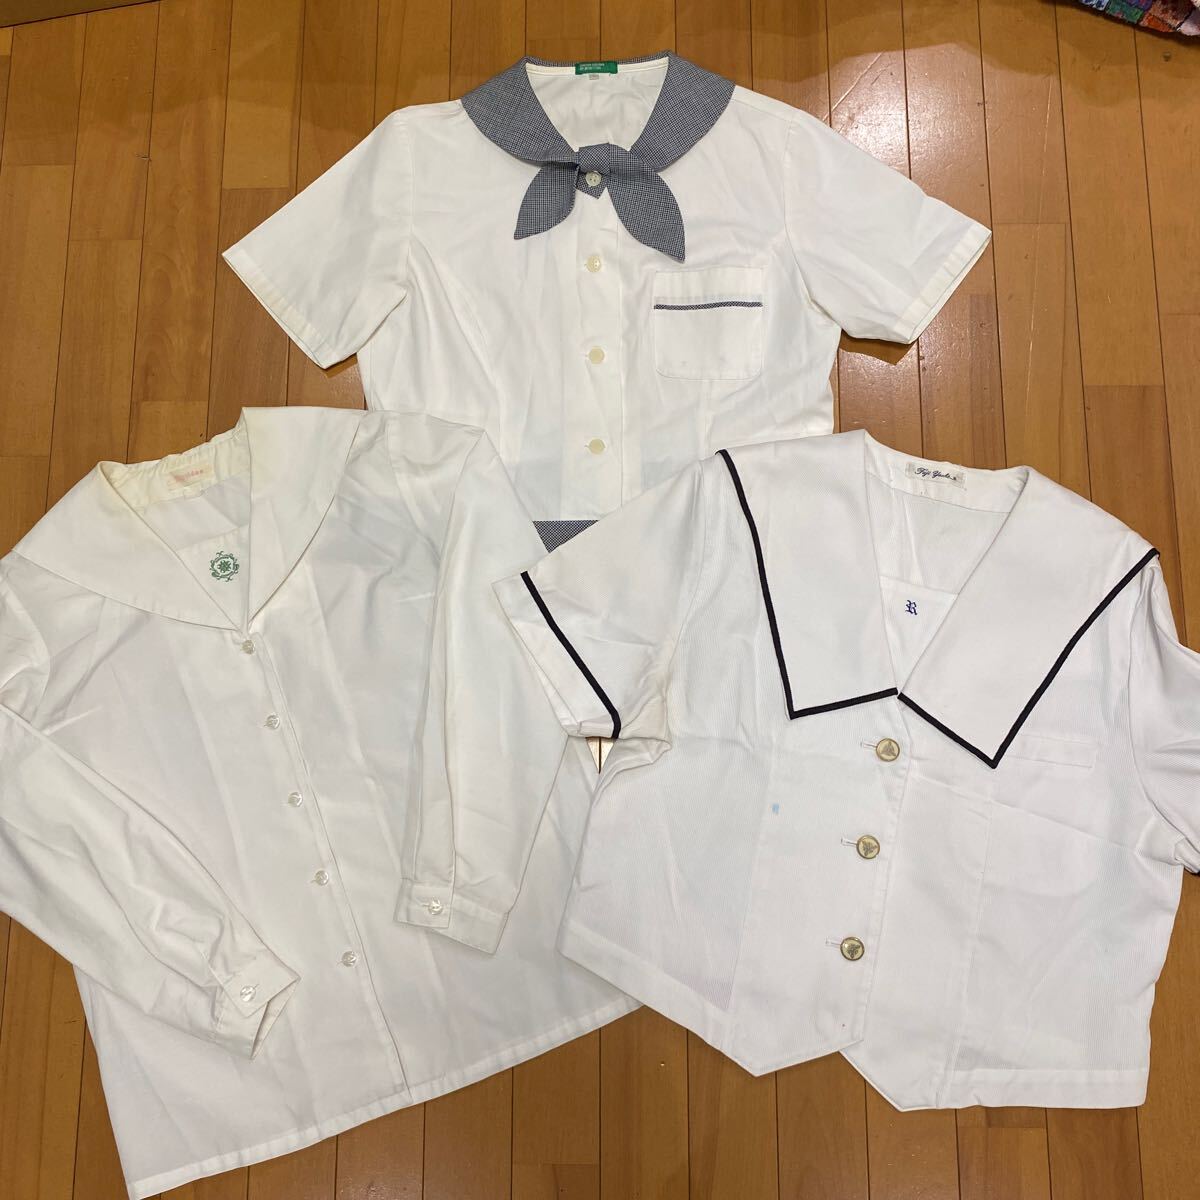 4 0 costume play clothes summer uniform short sleeves blouse 3 pieces set Ogaki Sakura beauty .... virtue an educational institution 